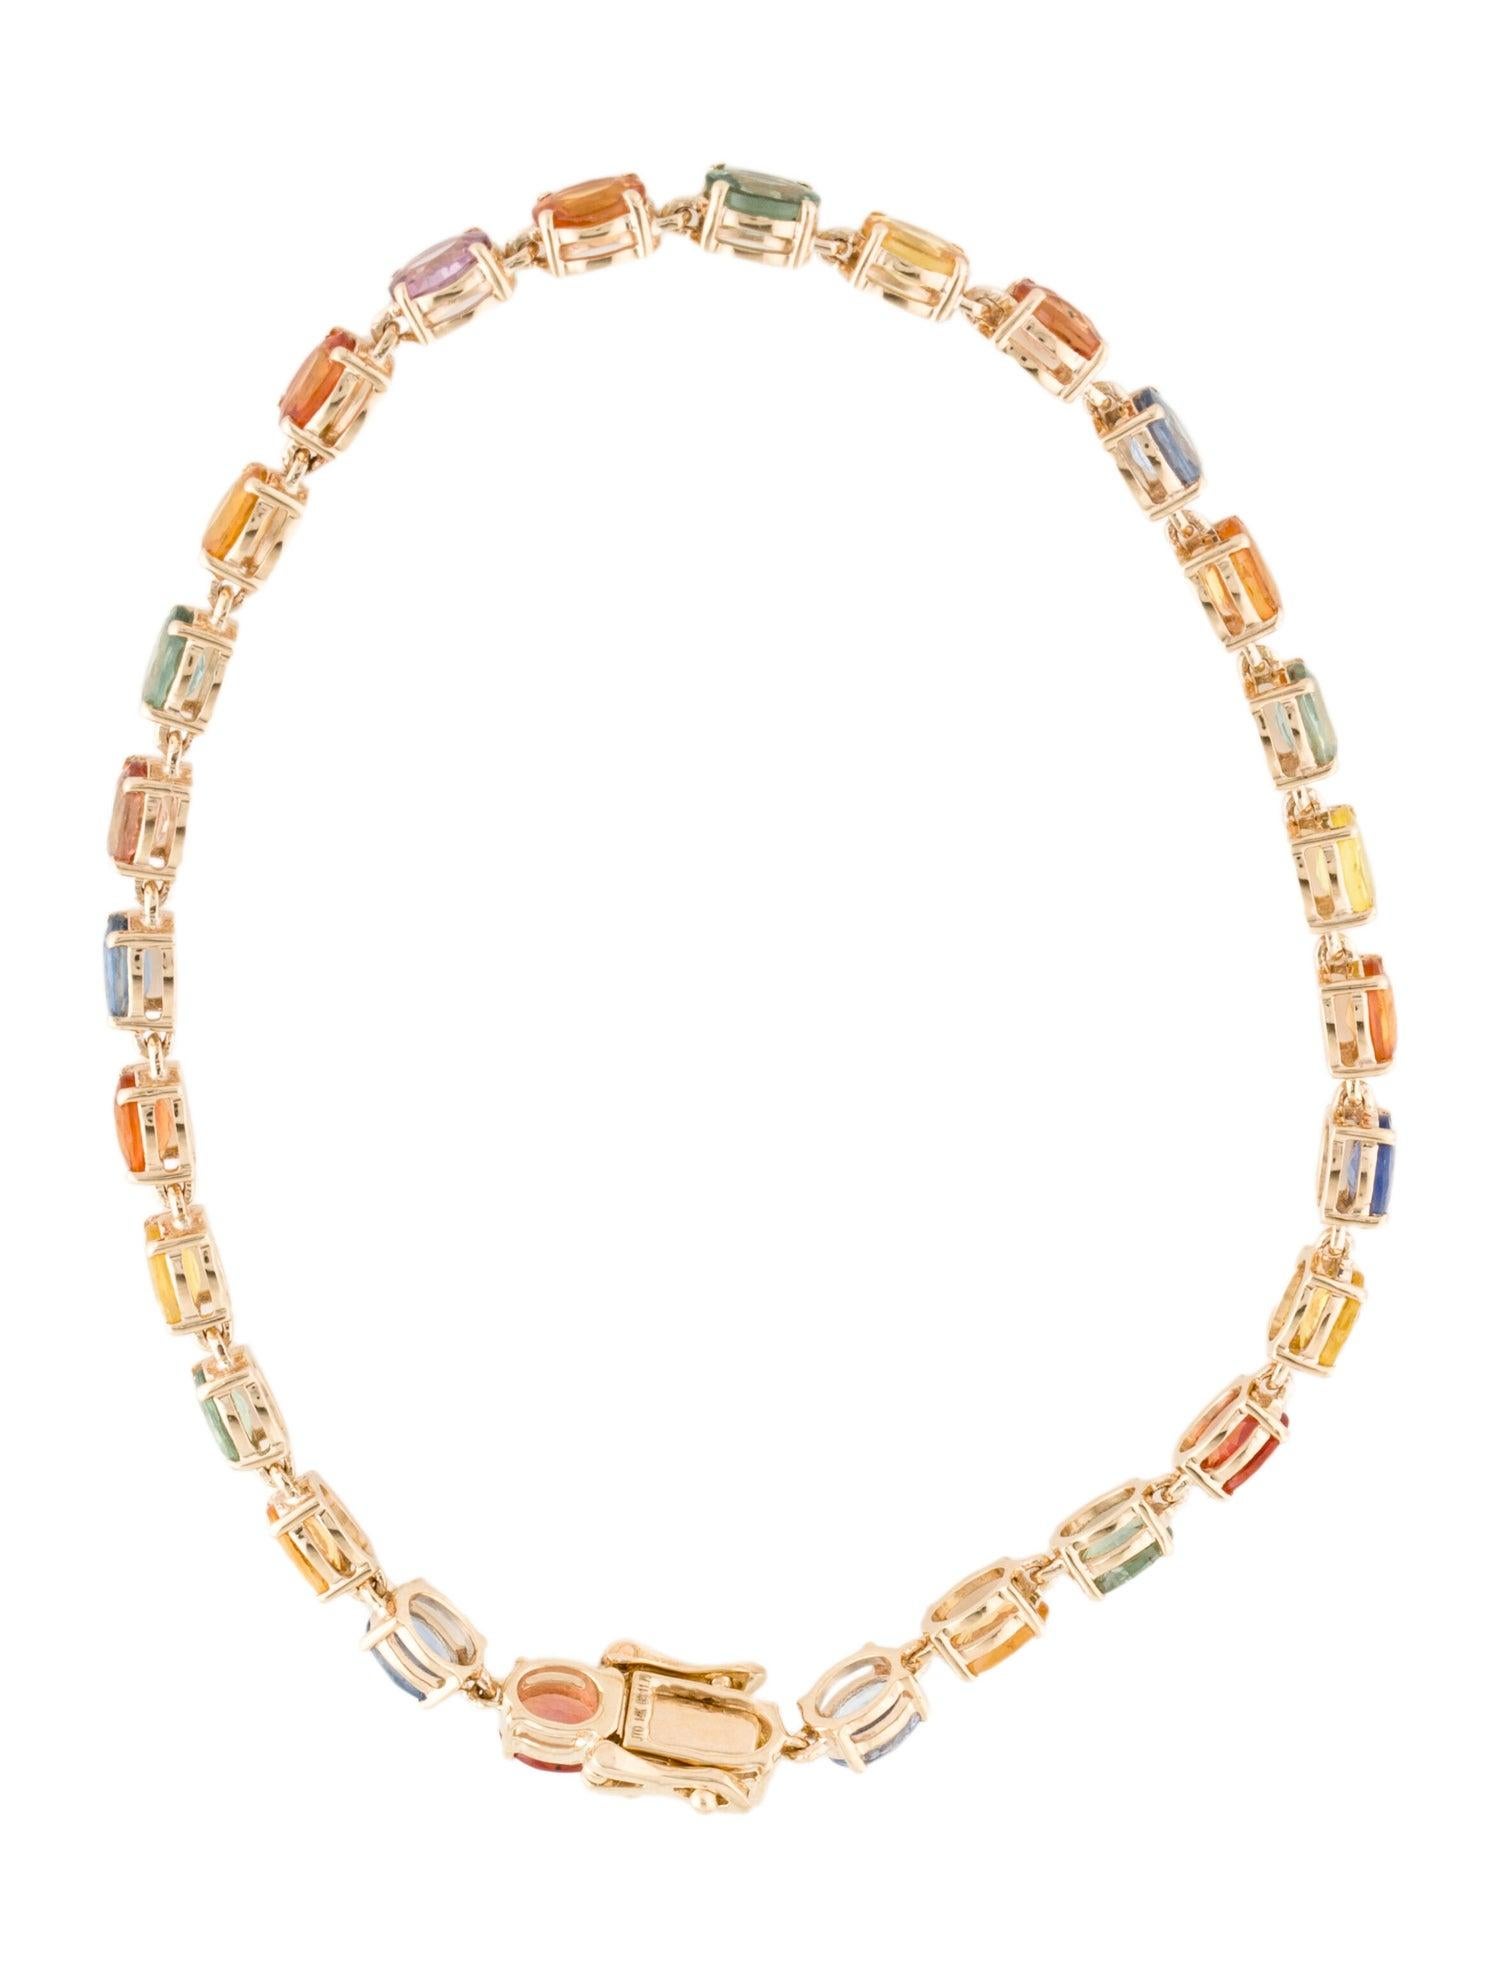 Women's Luxury 14K 11.79ctw Multi-Color Sapphire Tennis Bracelet - Timeless Elegance For Sale